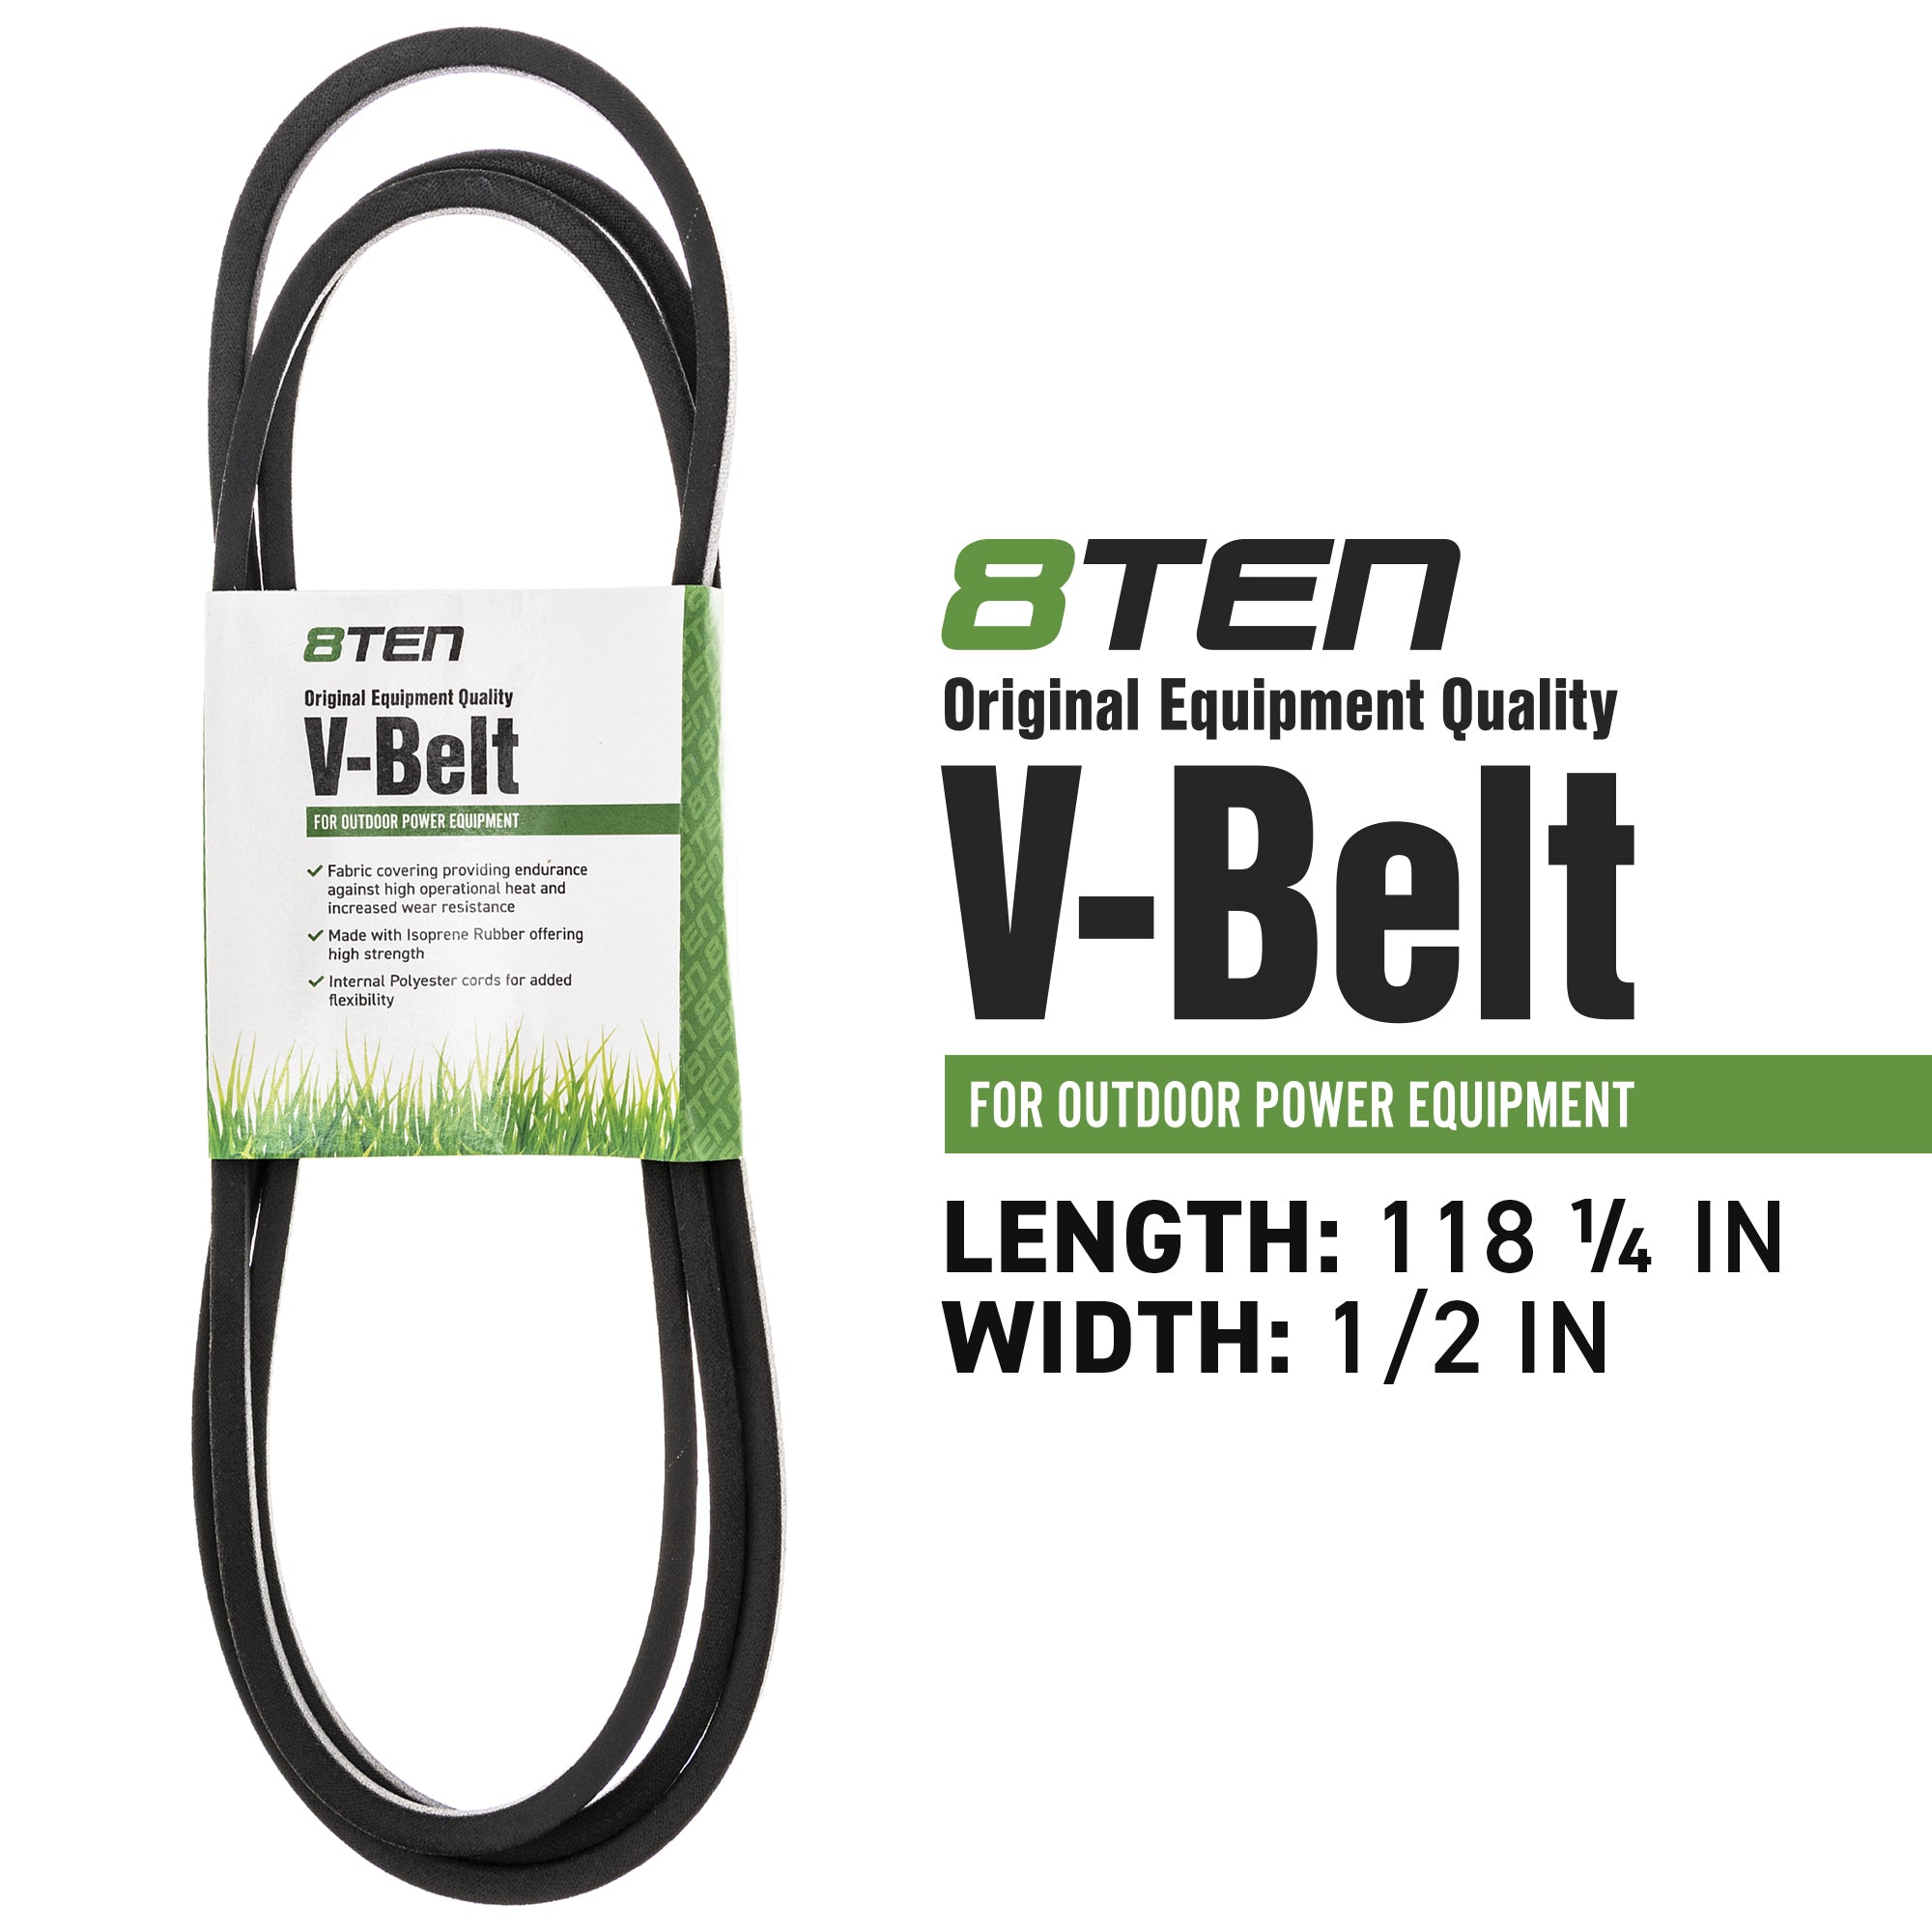 8TEN MK1006345 Clutch Belt Kit for Xtreme Warner Stens Oregon MTD